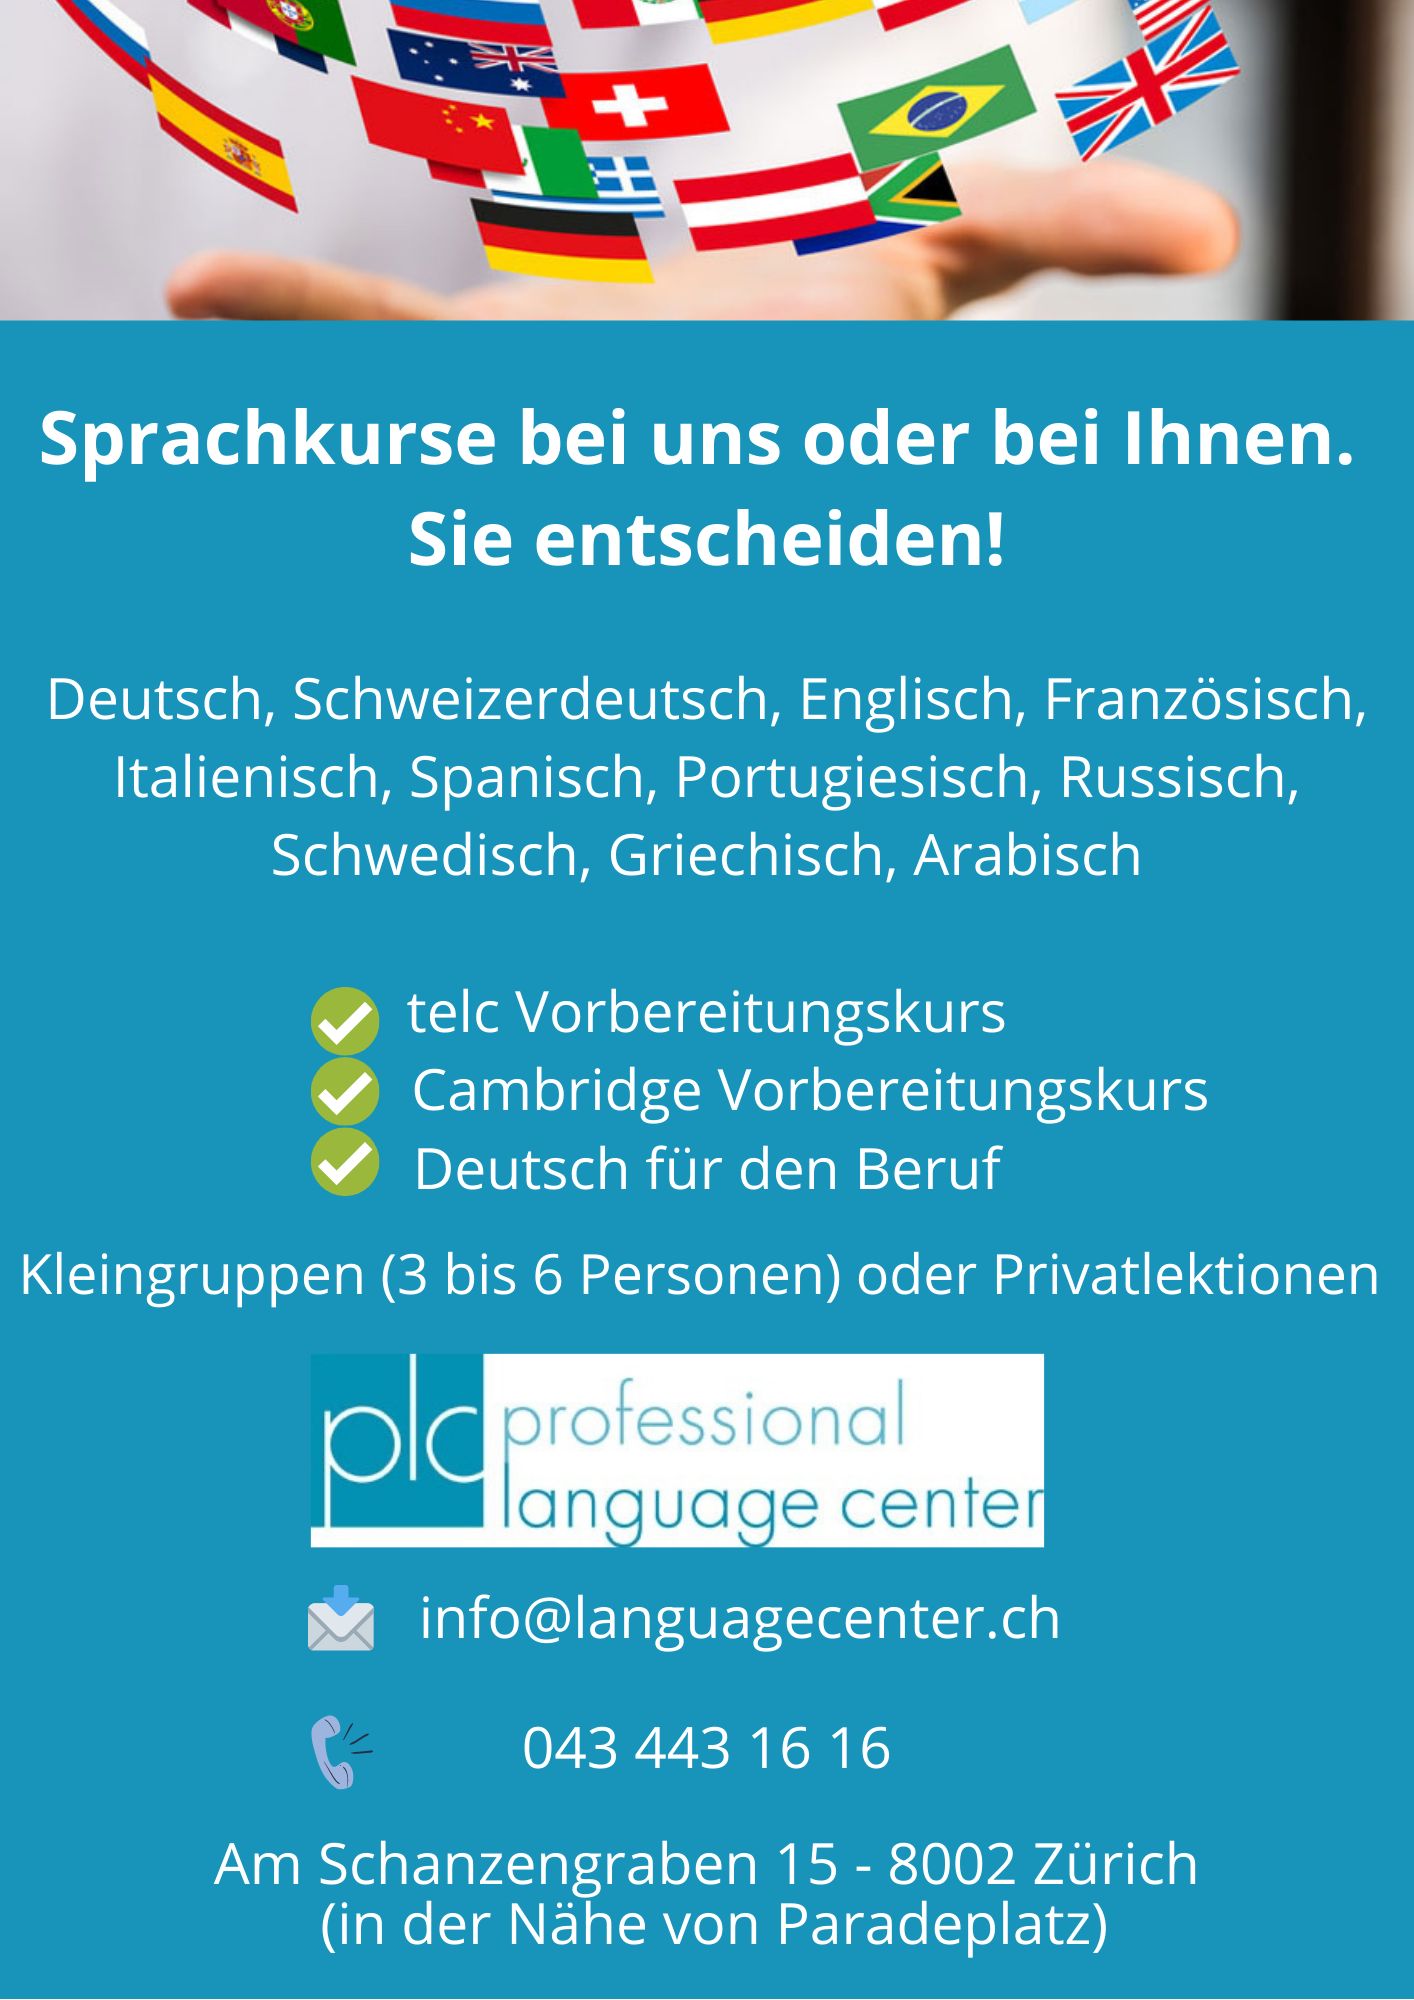 Bilder professional language center